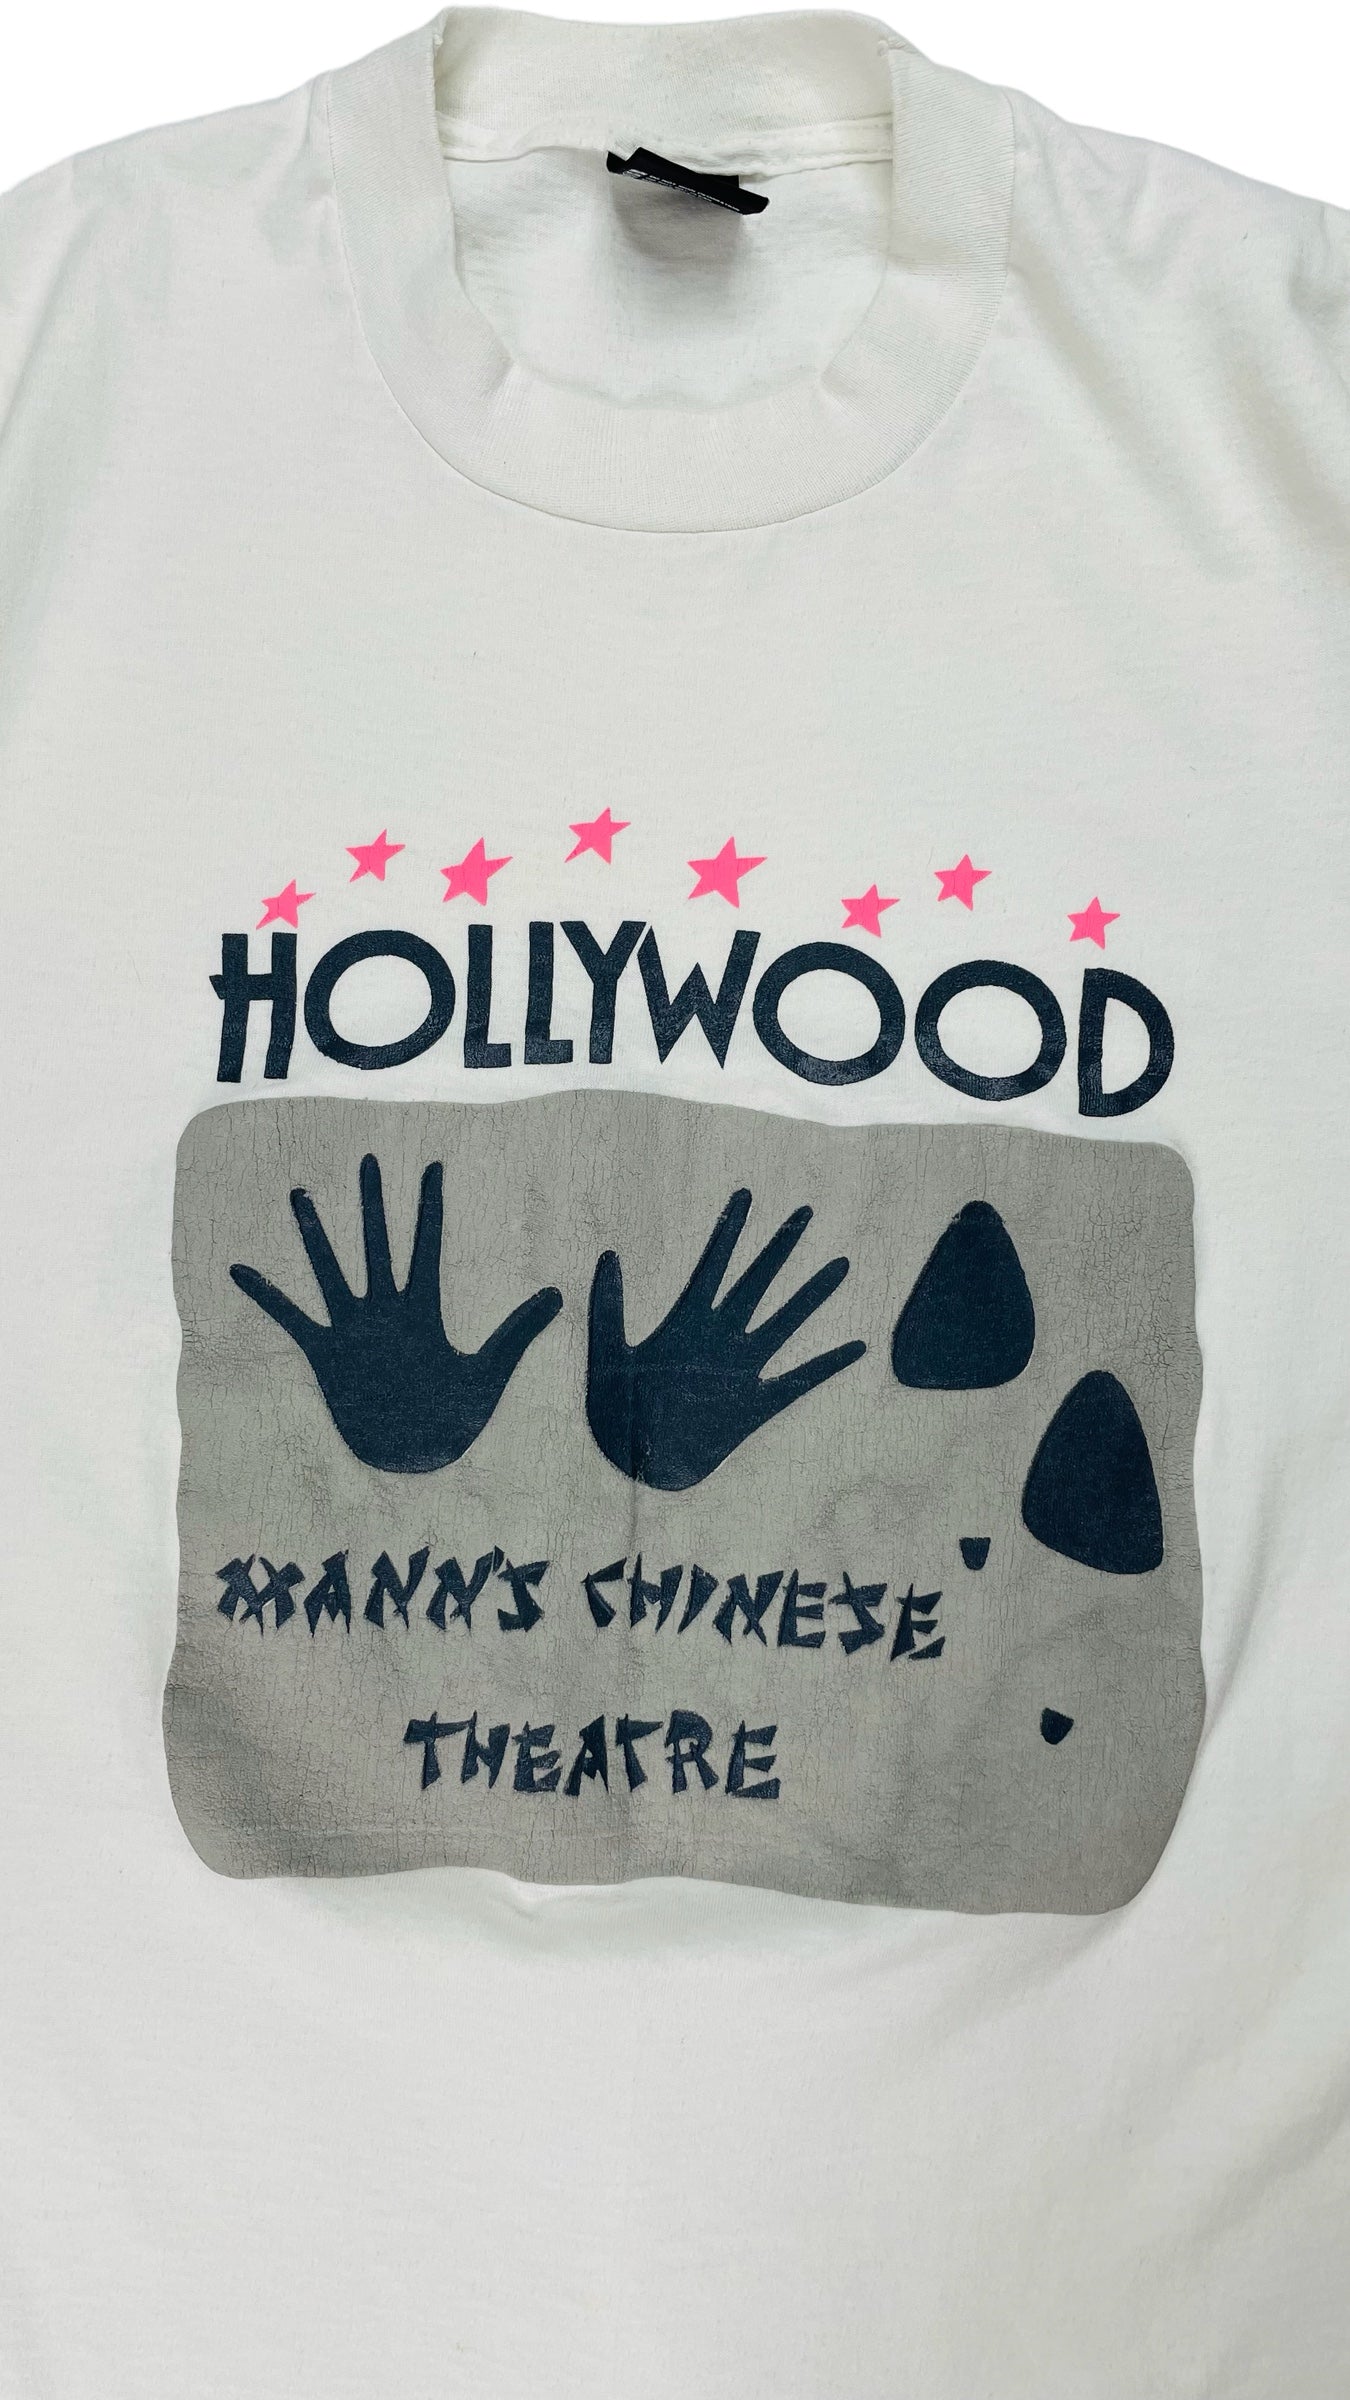 Vintage 90s white Hollywood souvenier t shirt - Size XL